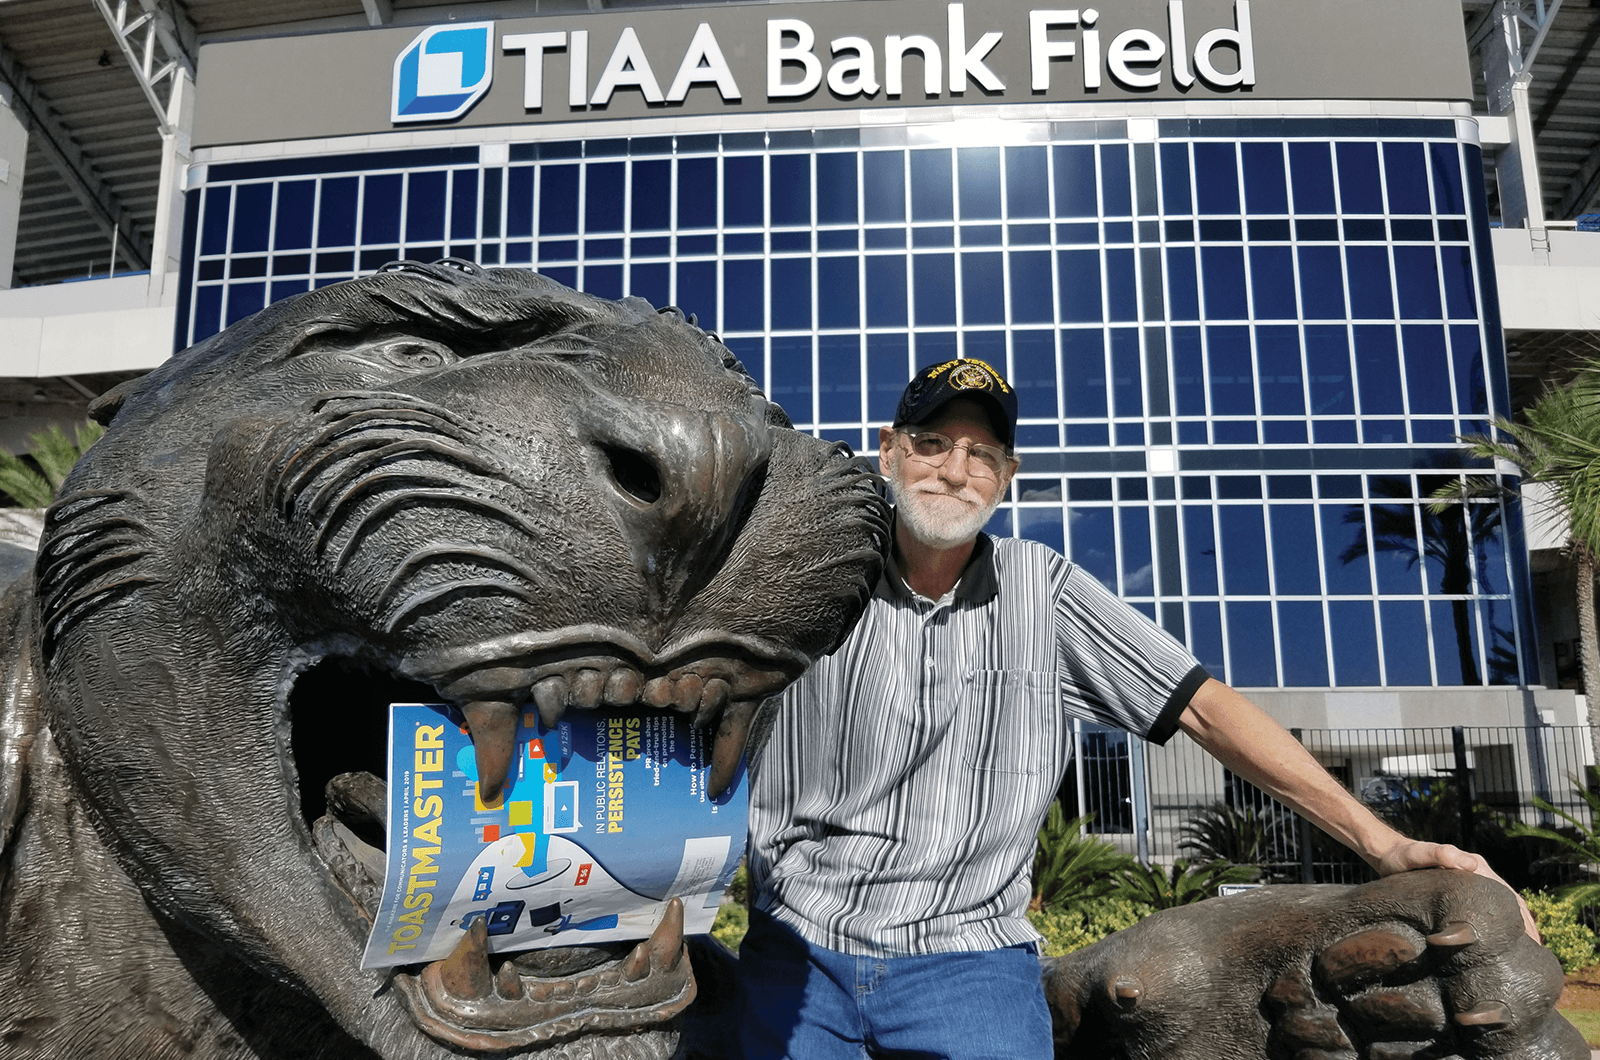 Bob Nowak of Jacksonville, Florida, poses outside of the home stadium of the National Football League’s Jacksonville Jaguars.  